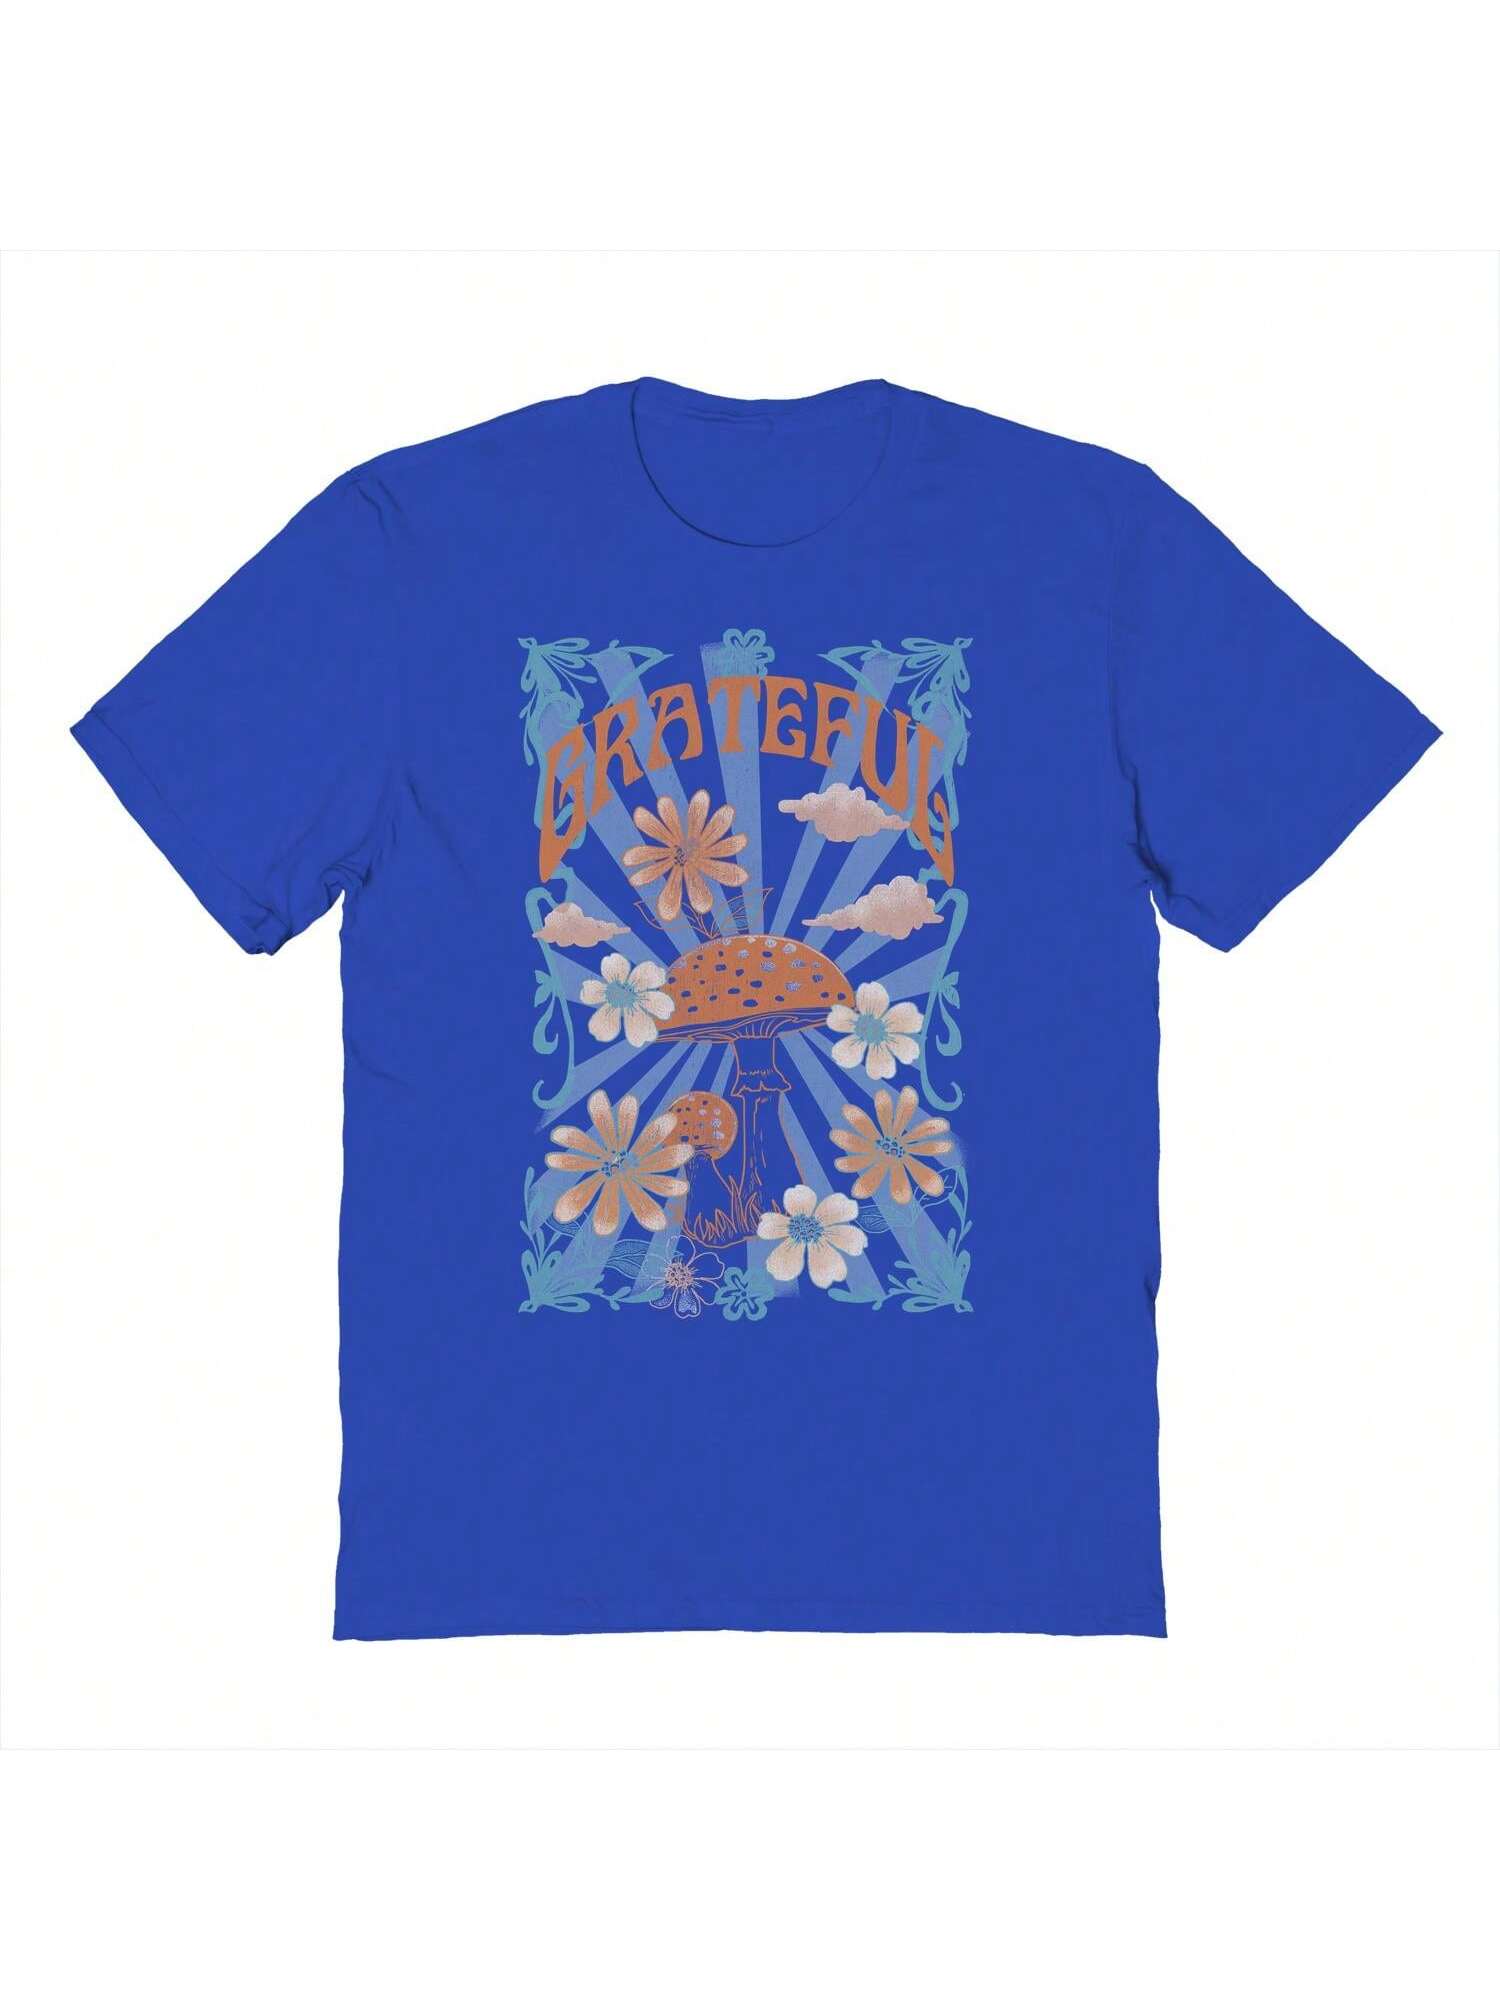 Хлопковая футболка унисекс с короткими рукавами «Почти там Grateful», королевский синий